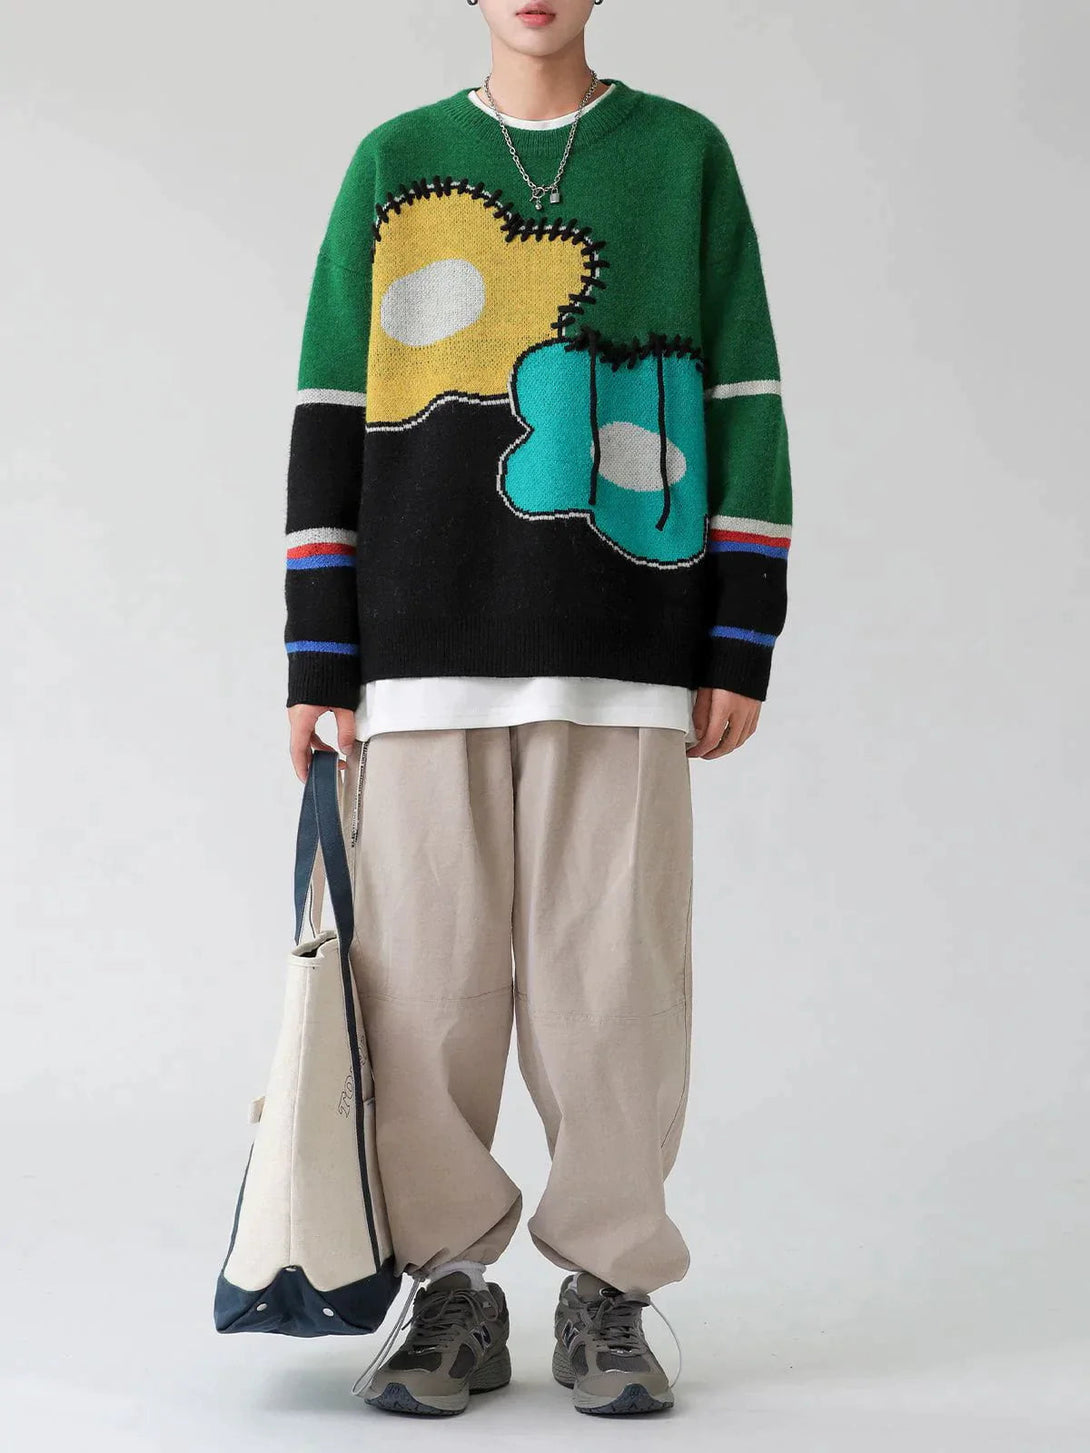 Majesda® - Flower Print Colorblock Sweater outfit ideas streetwear fashion